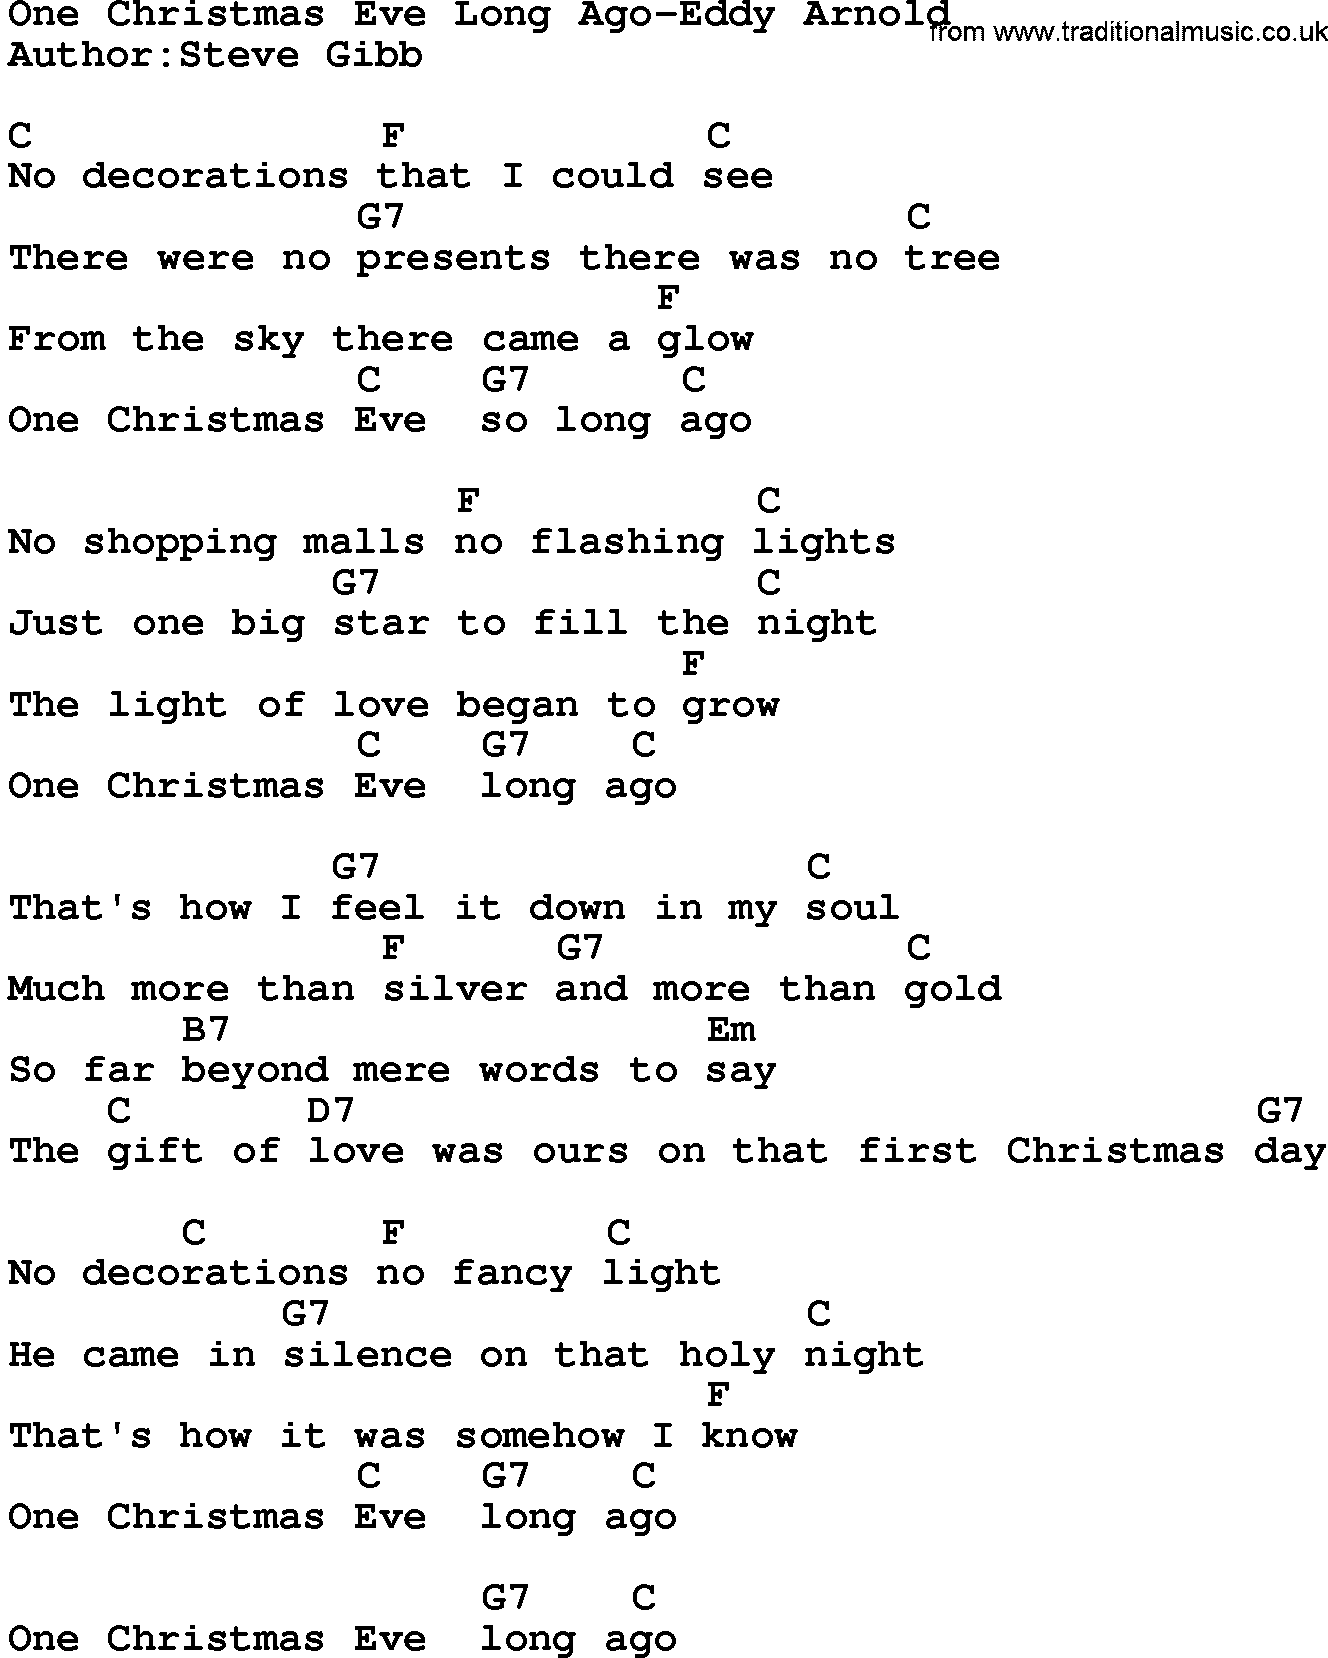 Country Music:One Christmas Eve Long Ago-Eddy Arnold Lyrics and Chords